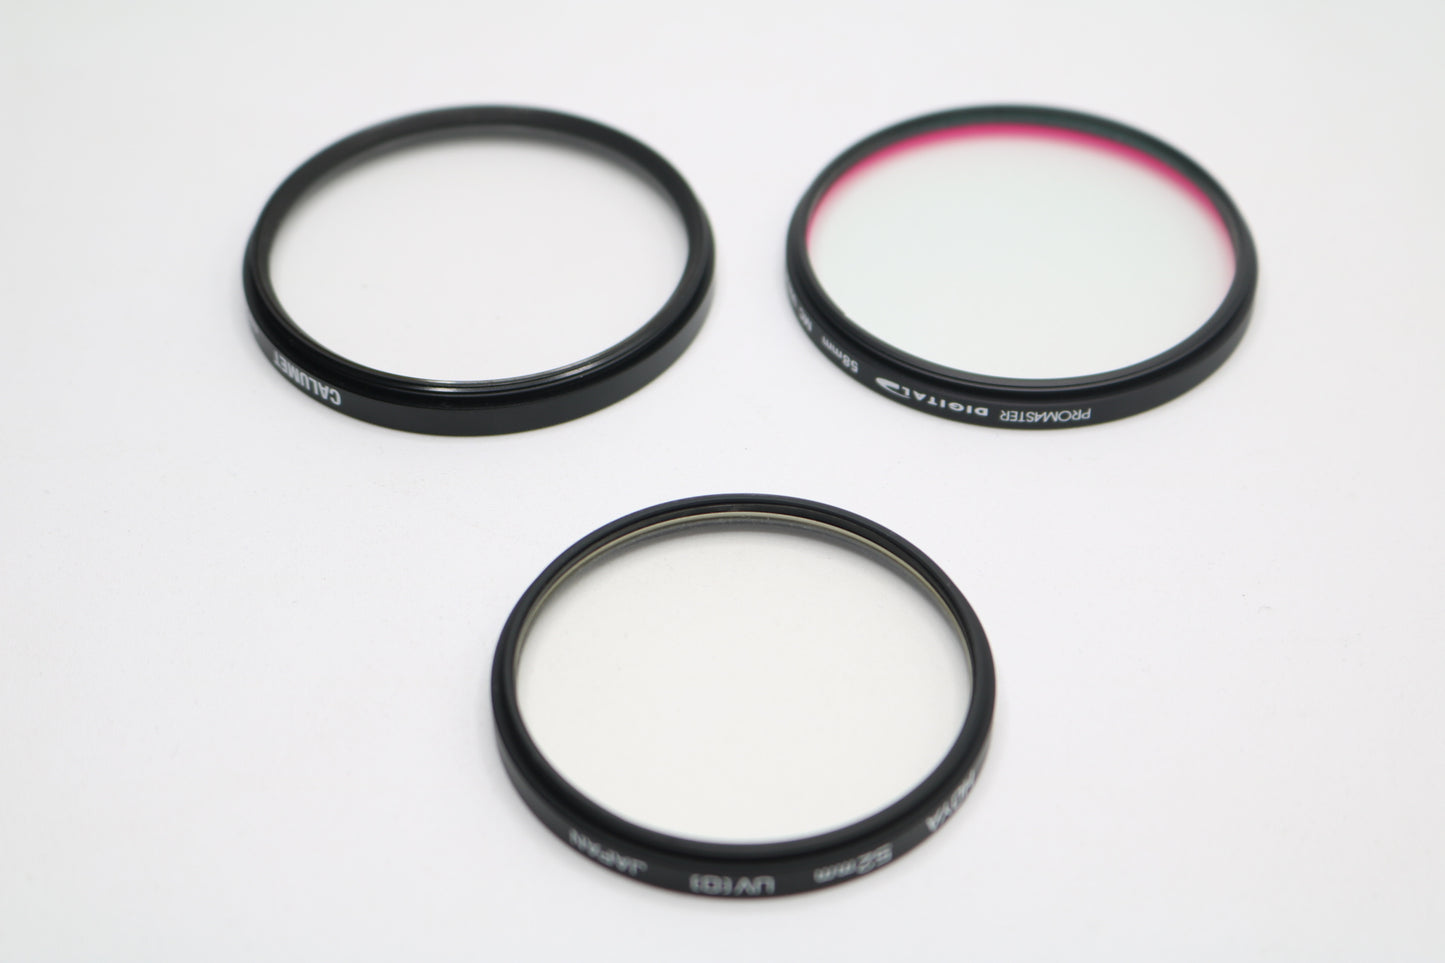 UV lenses Hoya 52mm, Camulet 58mm, and Promaster 58mm